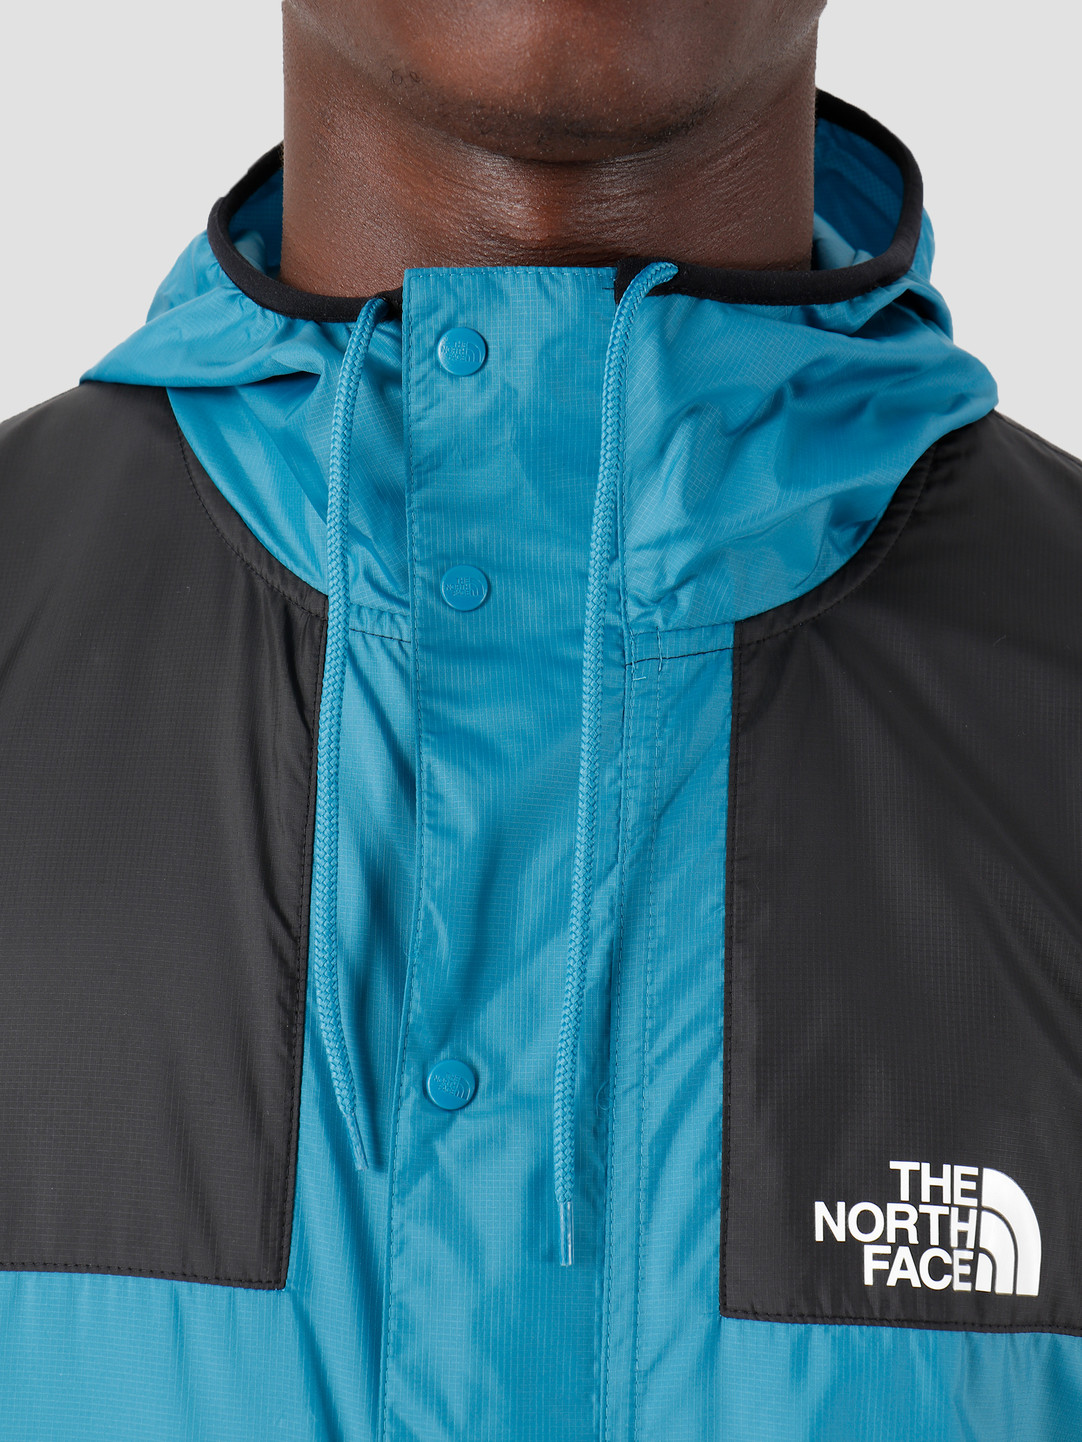 the north face saxony jacket